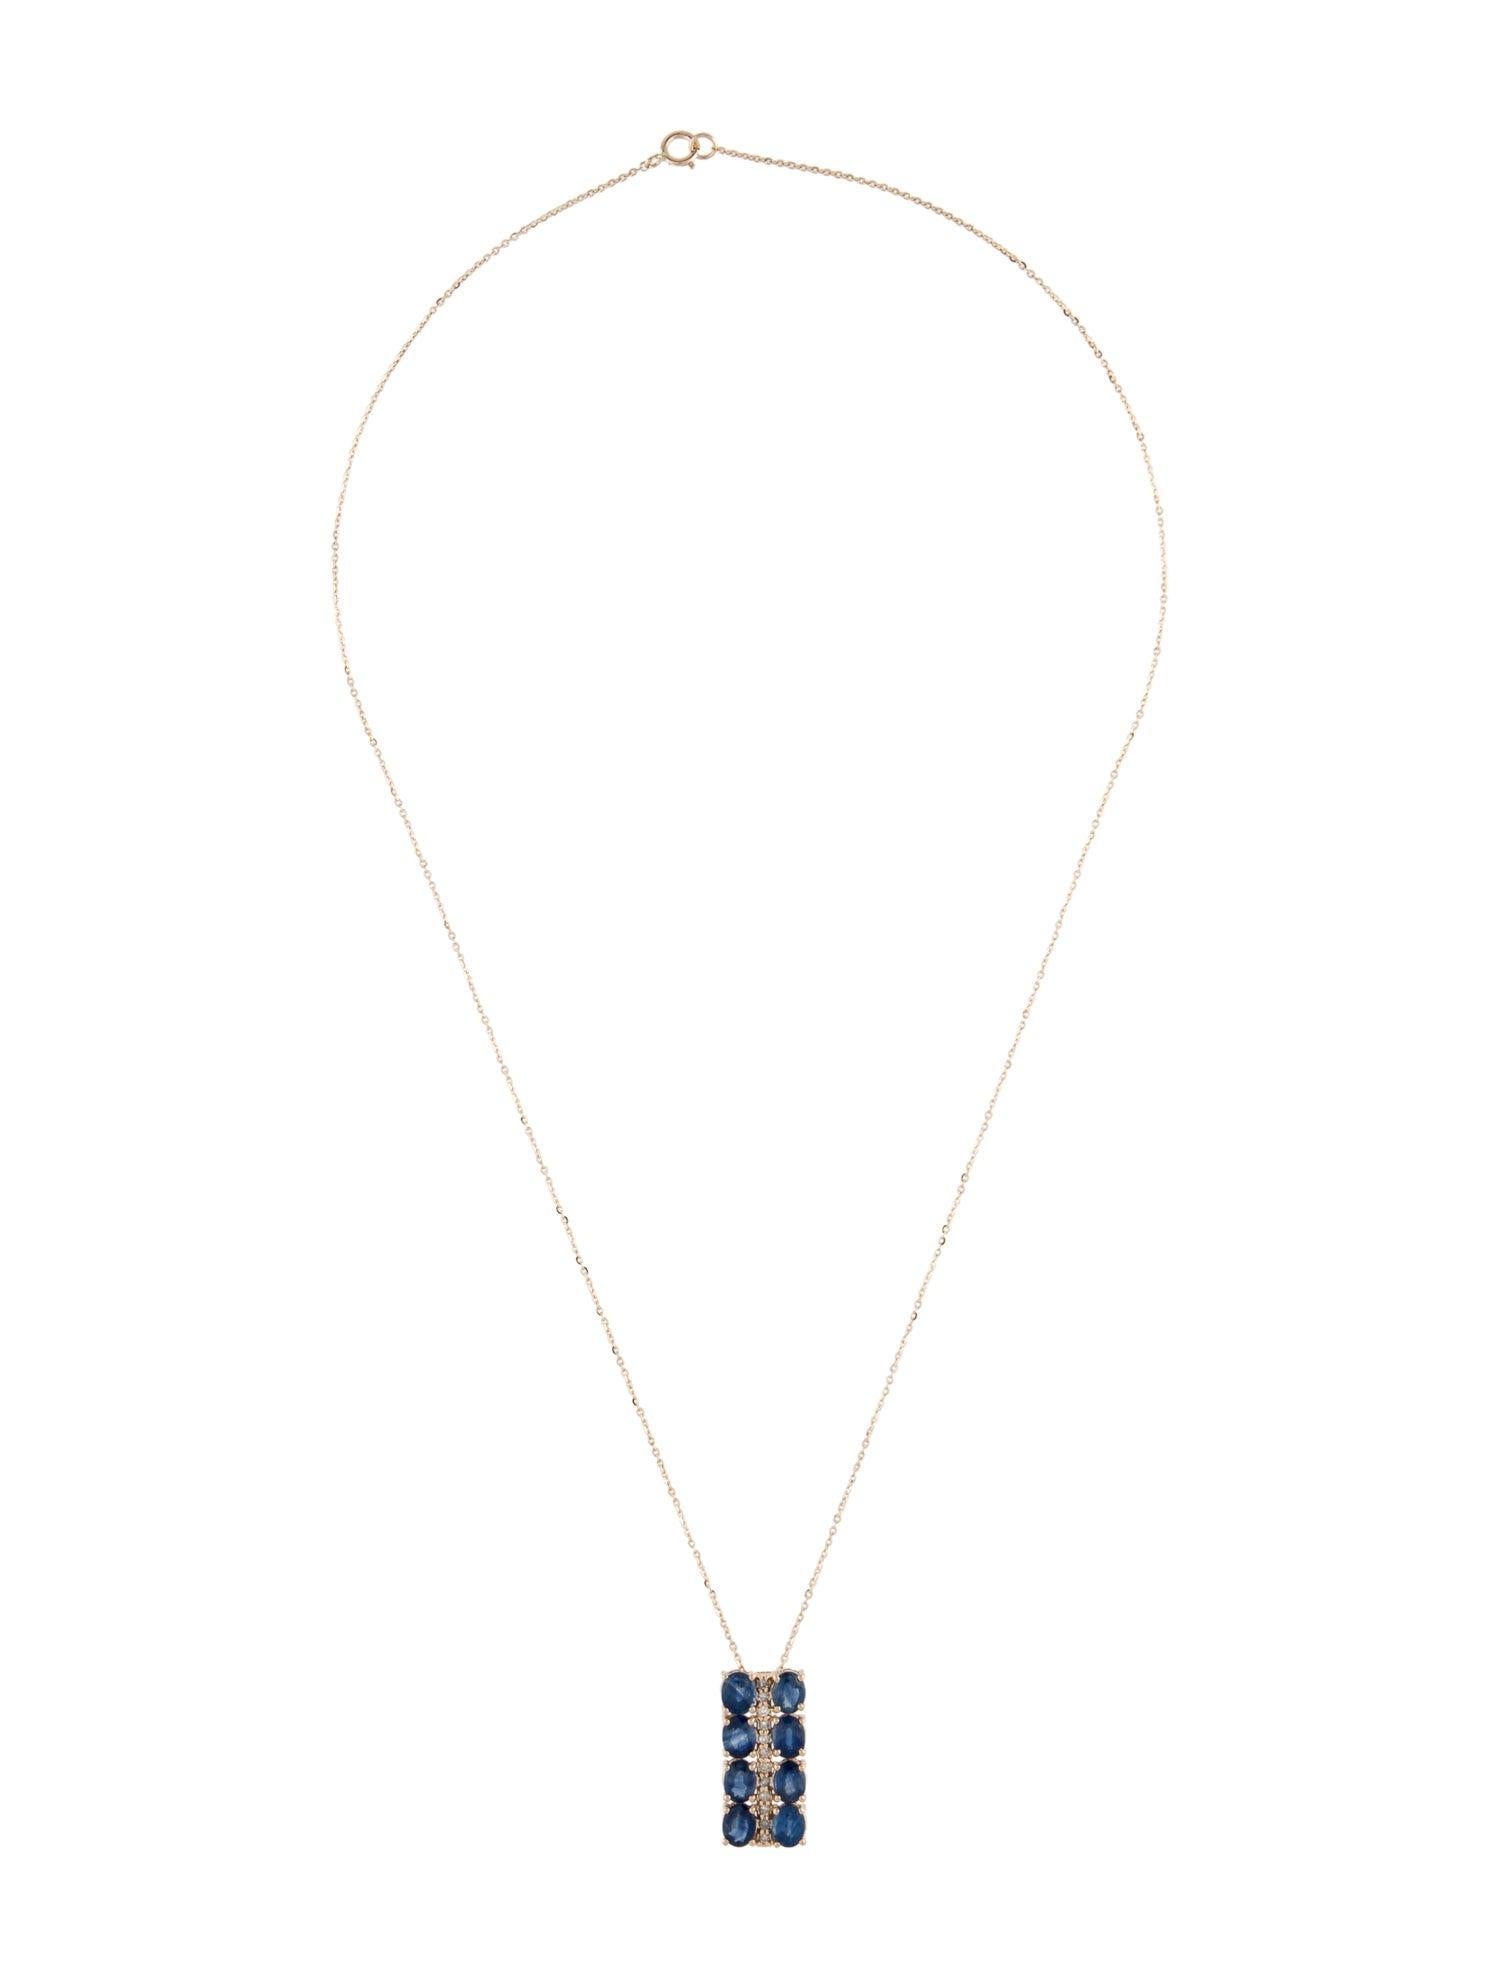 Brilliant Cut 14K 3.78ctw Sapphire & Diamond Pendant Necklace: Luxury Statement Jewelry Piece For Sale